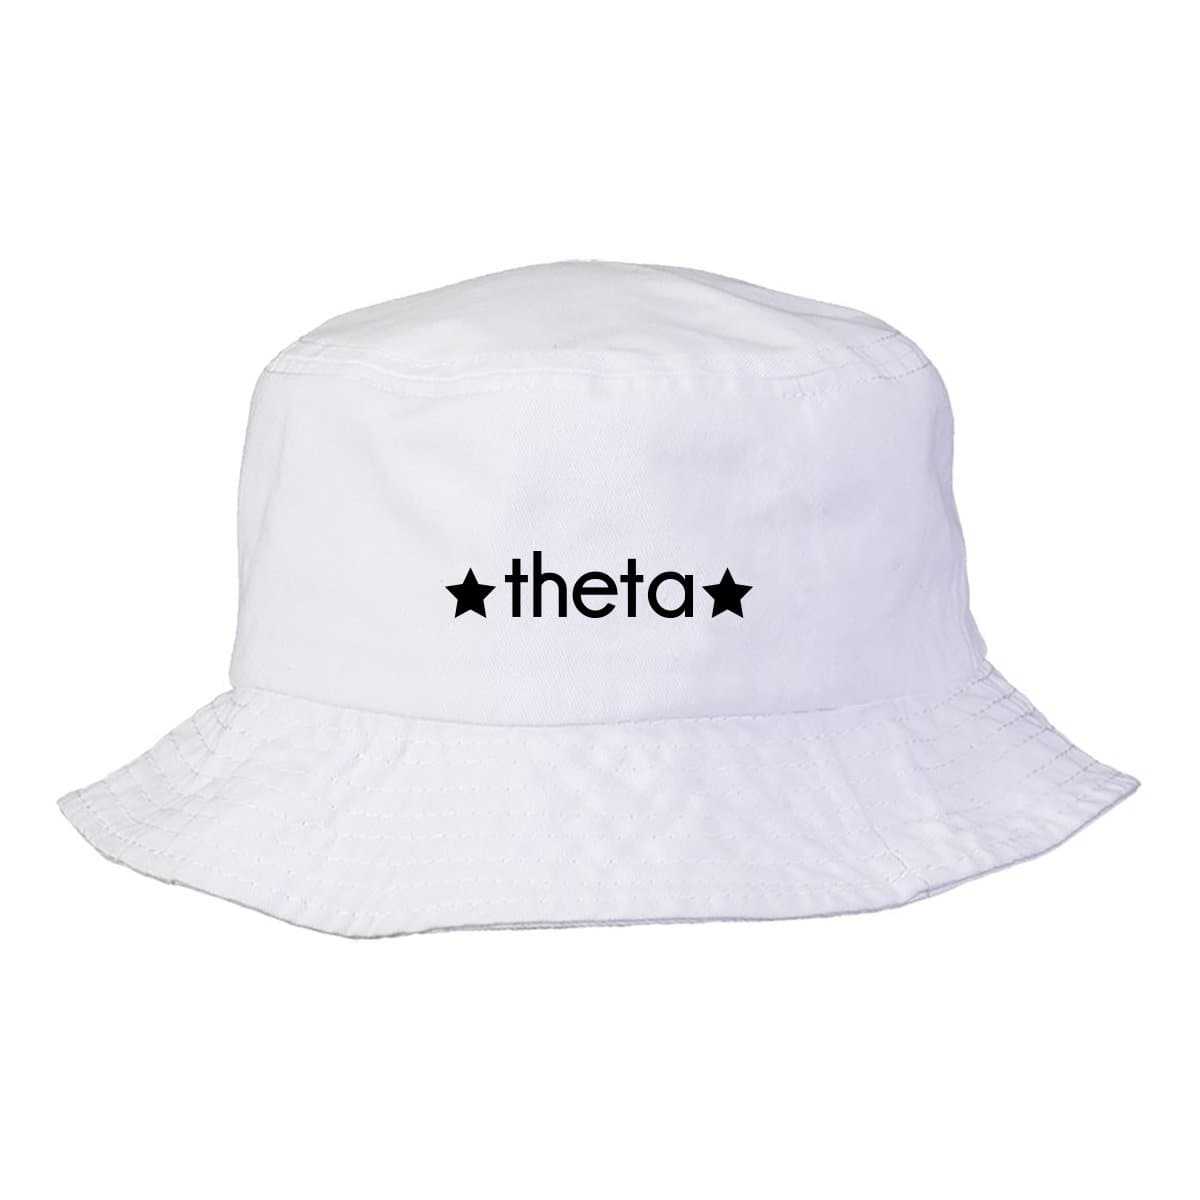 Theta Simple Star Bucket Hat | Kappa Alpha Theta | Headwear > Bucket hats